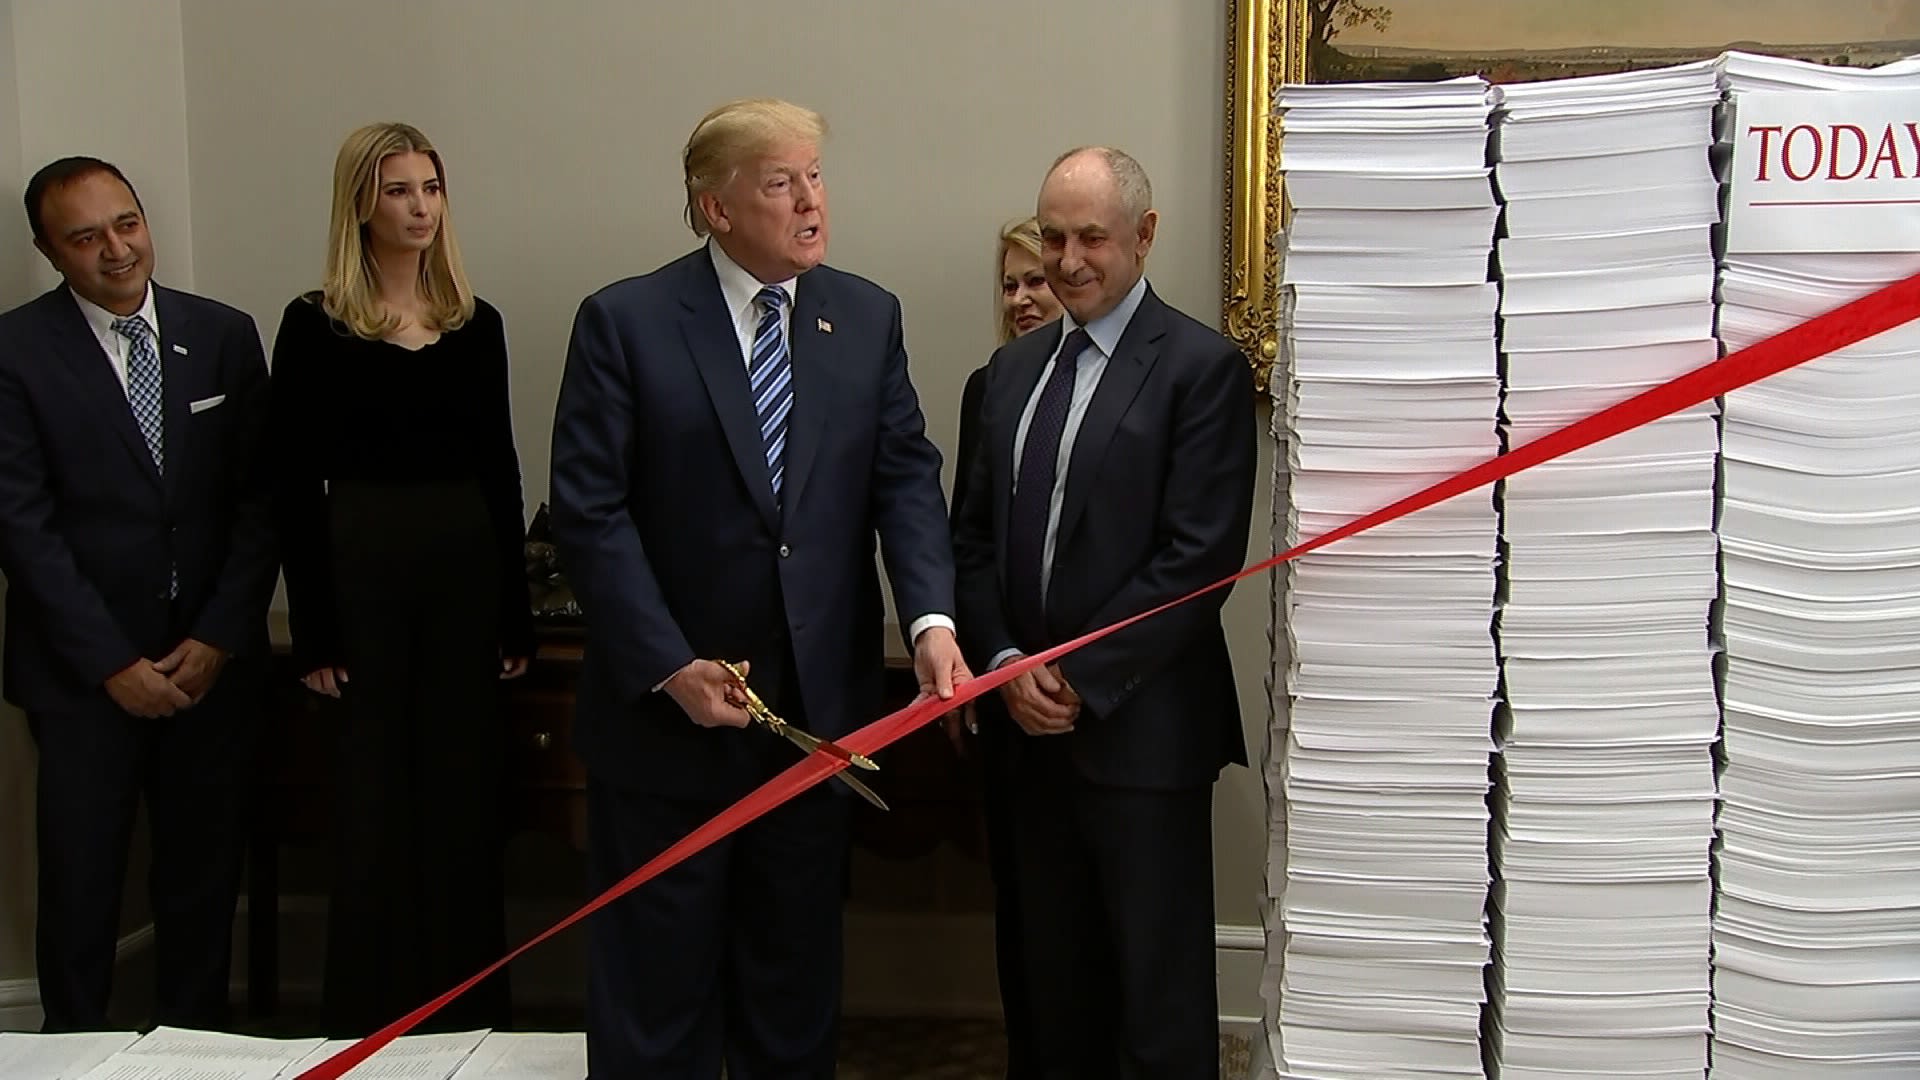 U.S President Donald Trump, center, joins a ribbon cutting